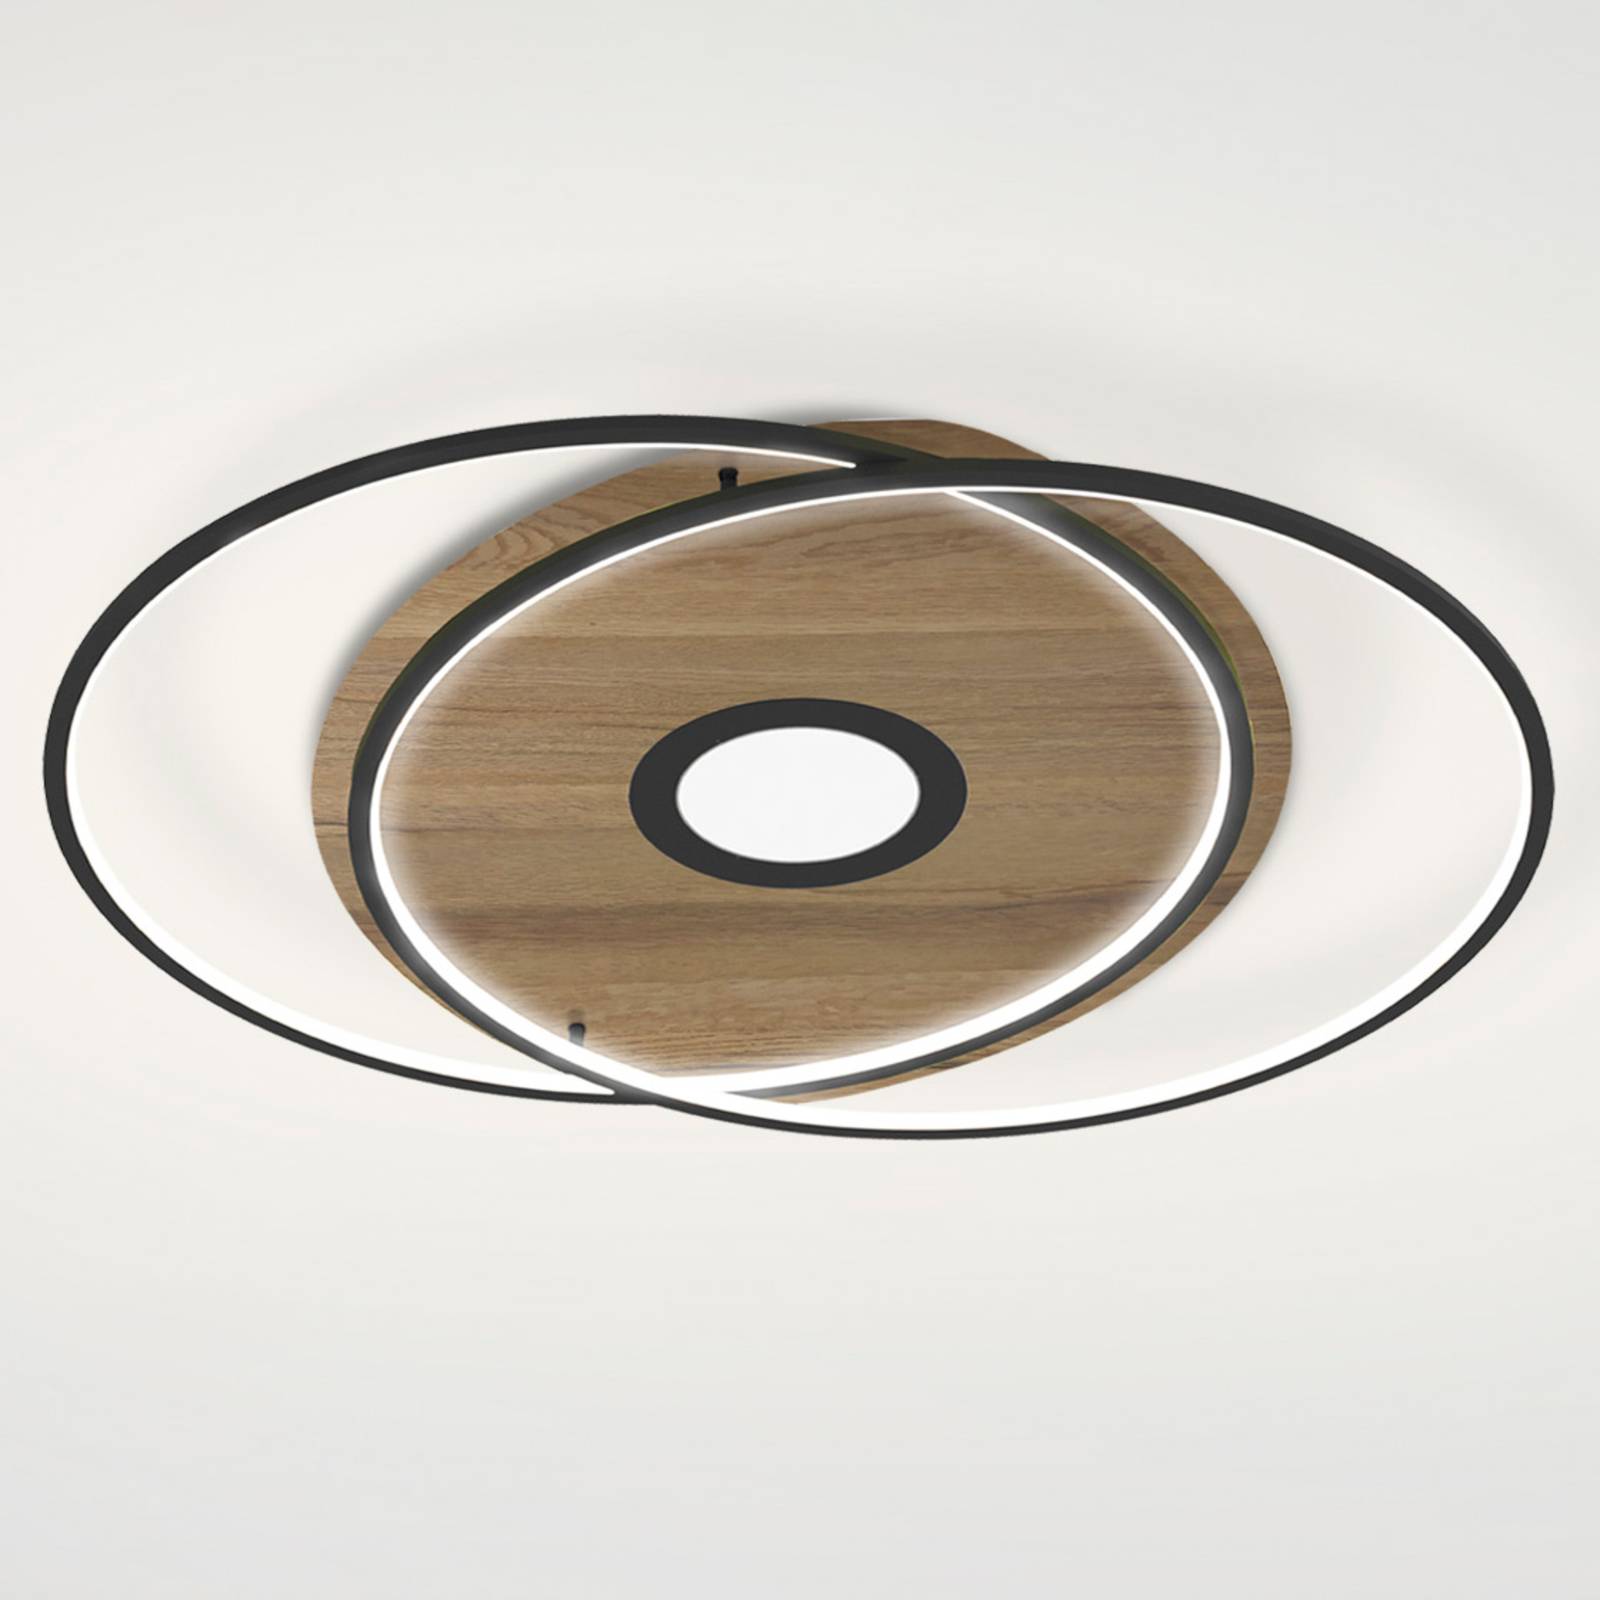 Image of Q-Smart-Home Paul Neuhaus Q-AMIRA plafonnier LED ovale, brun 4012248351932